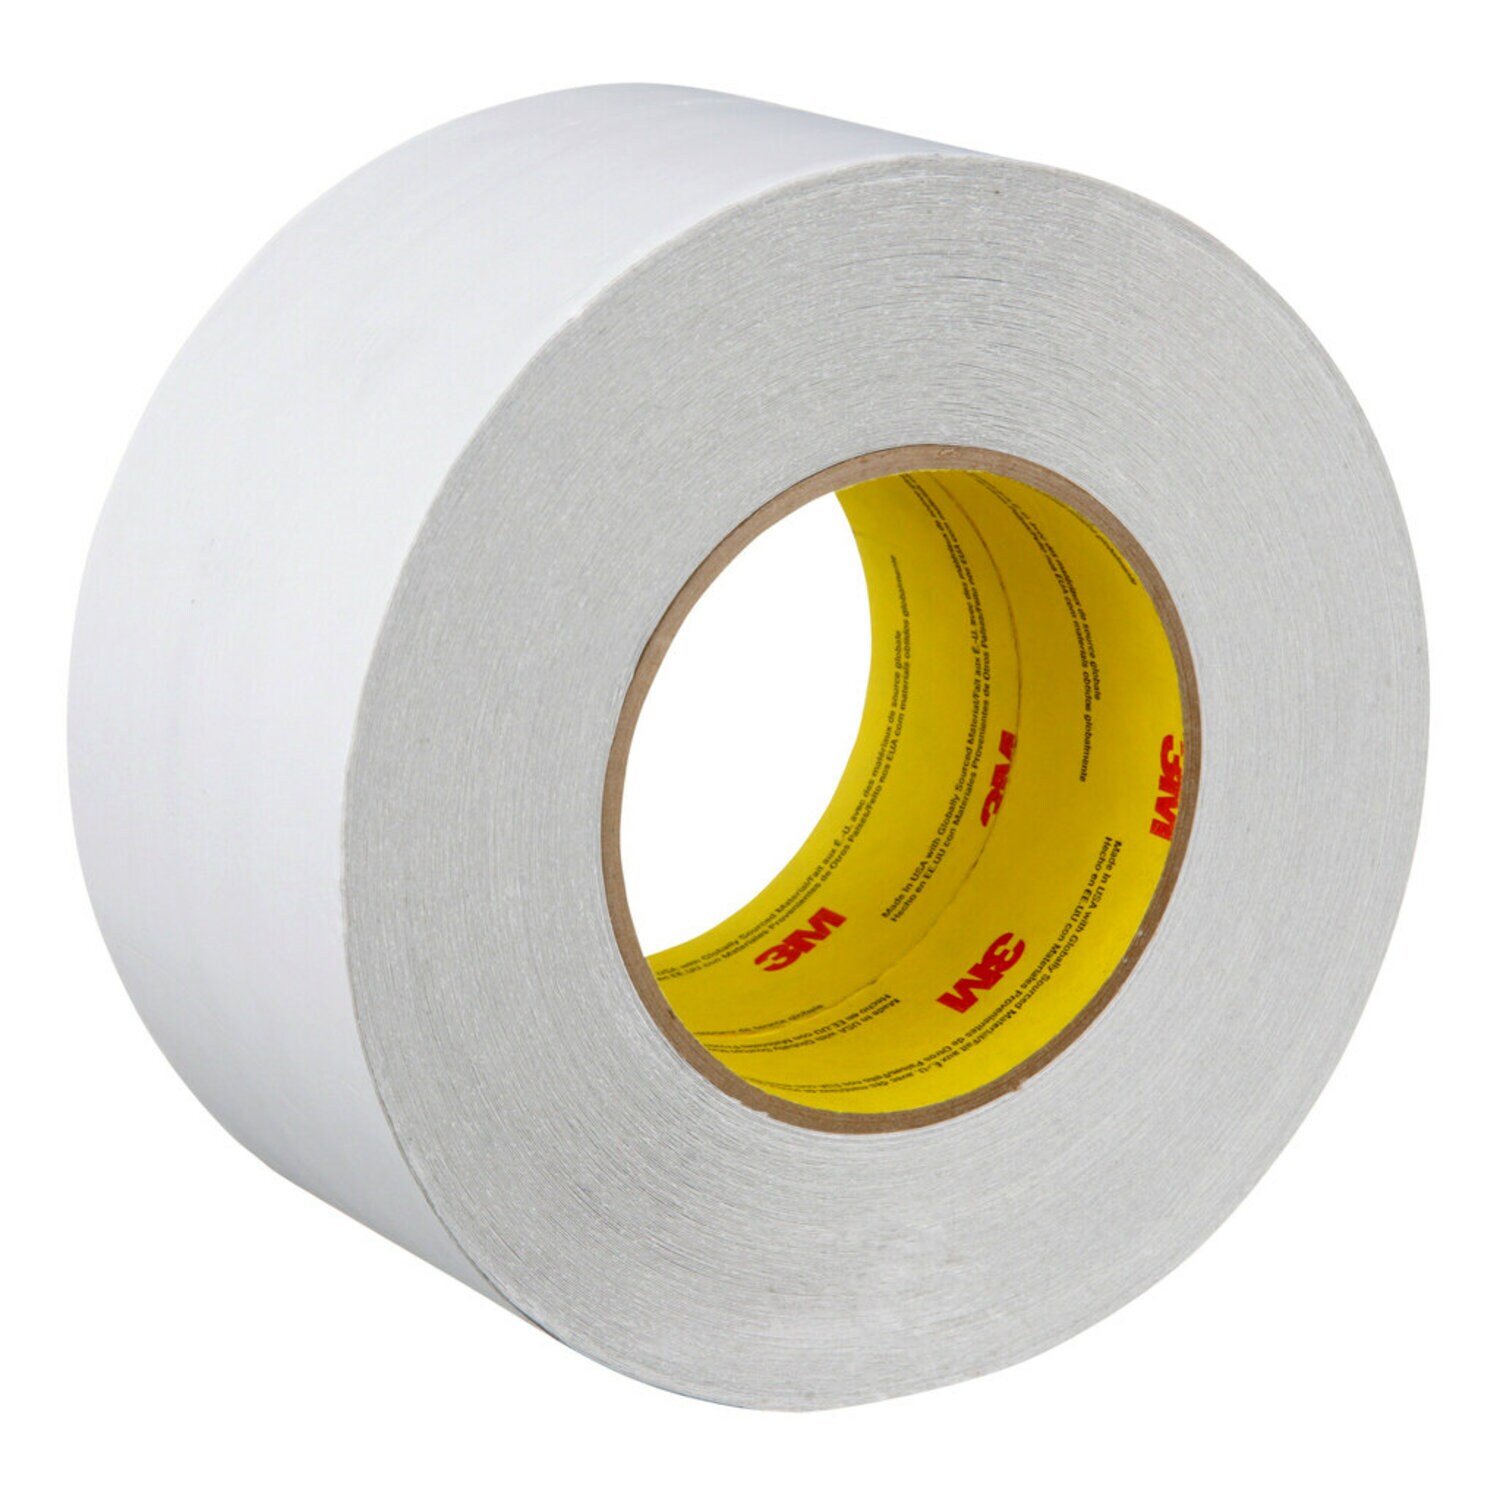 7010335933 - "3M Venture Tape White Aluminum Foil Tape 1558HT, 72 mm a 45.7 m,
5.4
mil, 16 Rolls/Case"